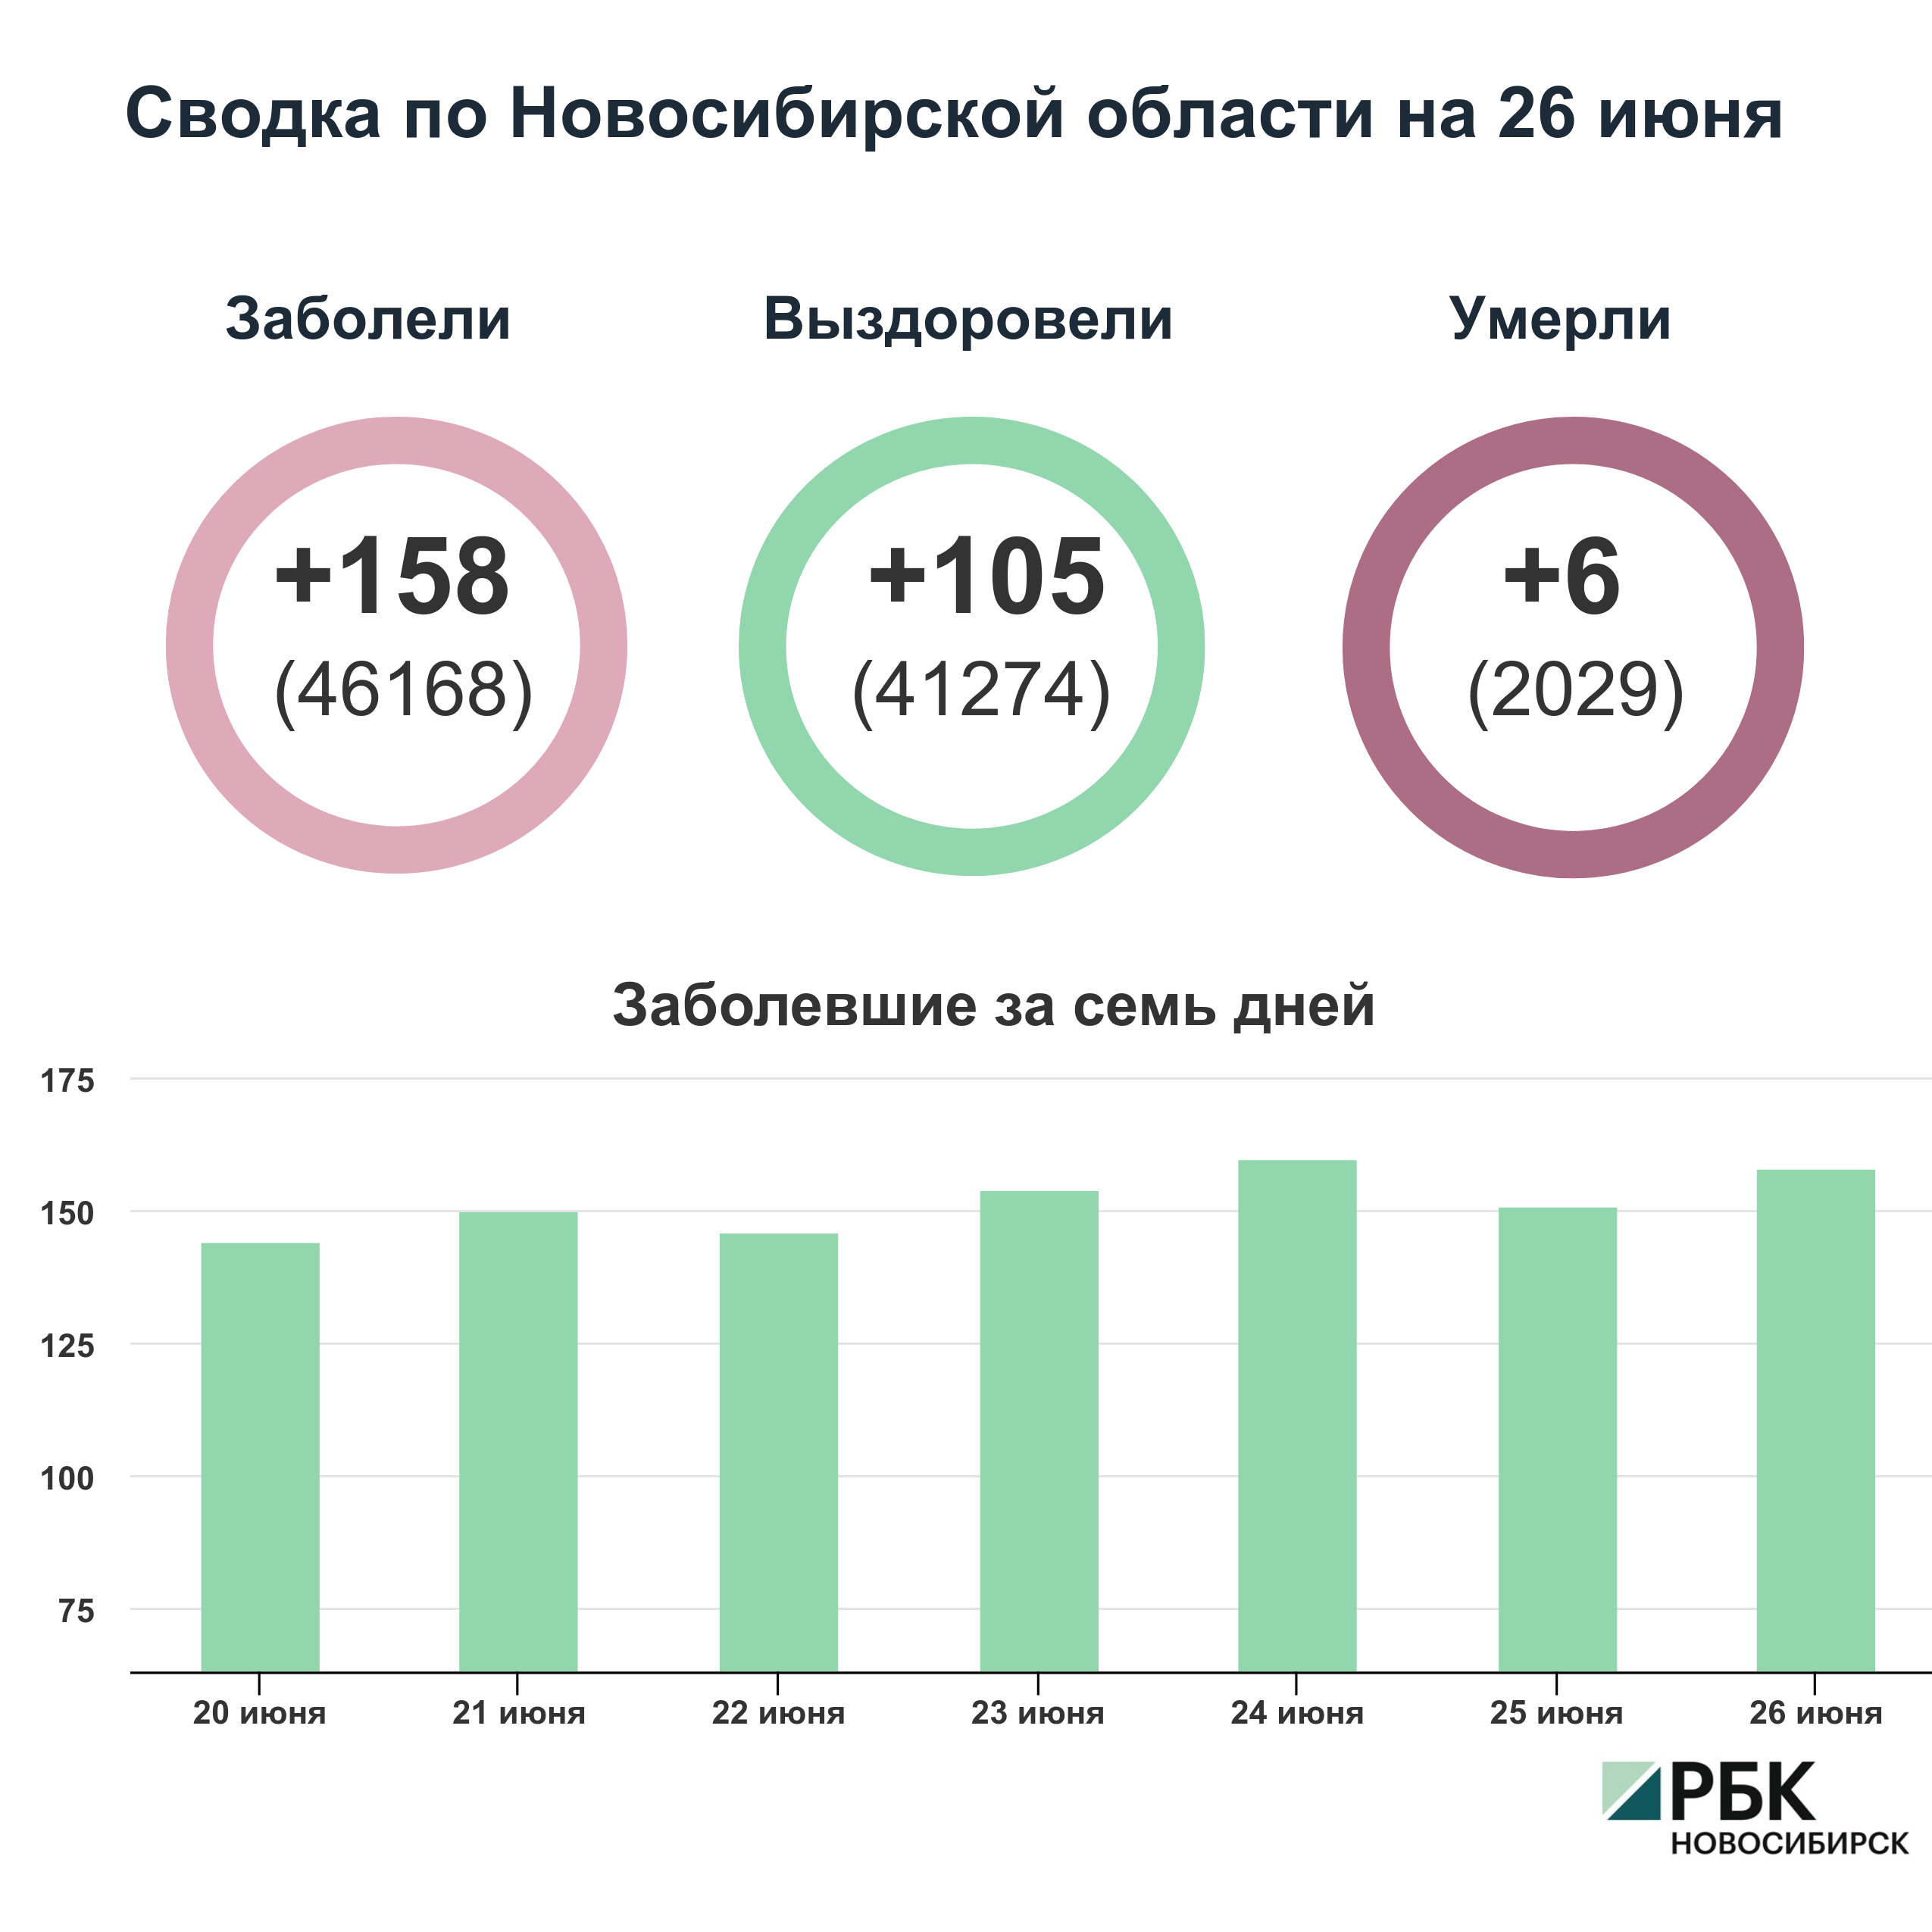 Коронавирус в Новосибирске: сводка на 26 июня